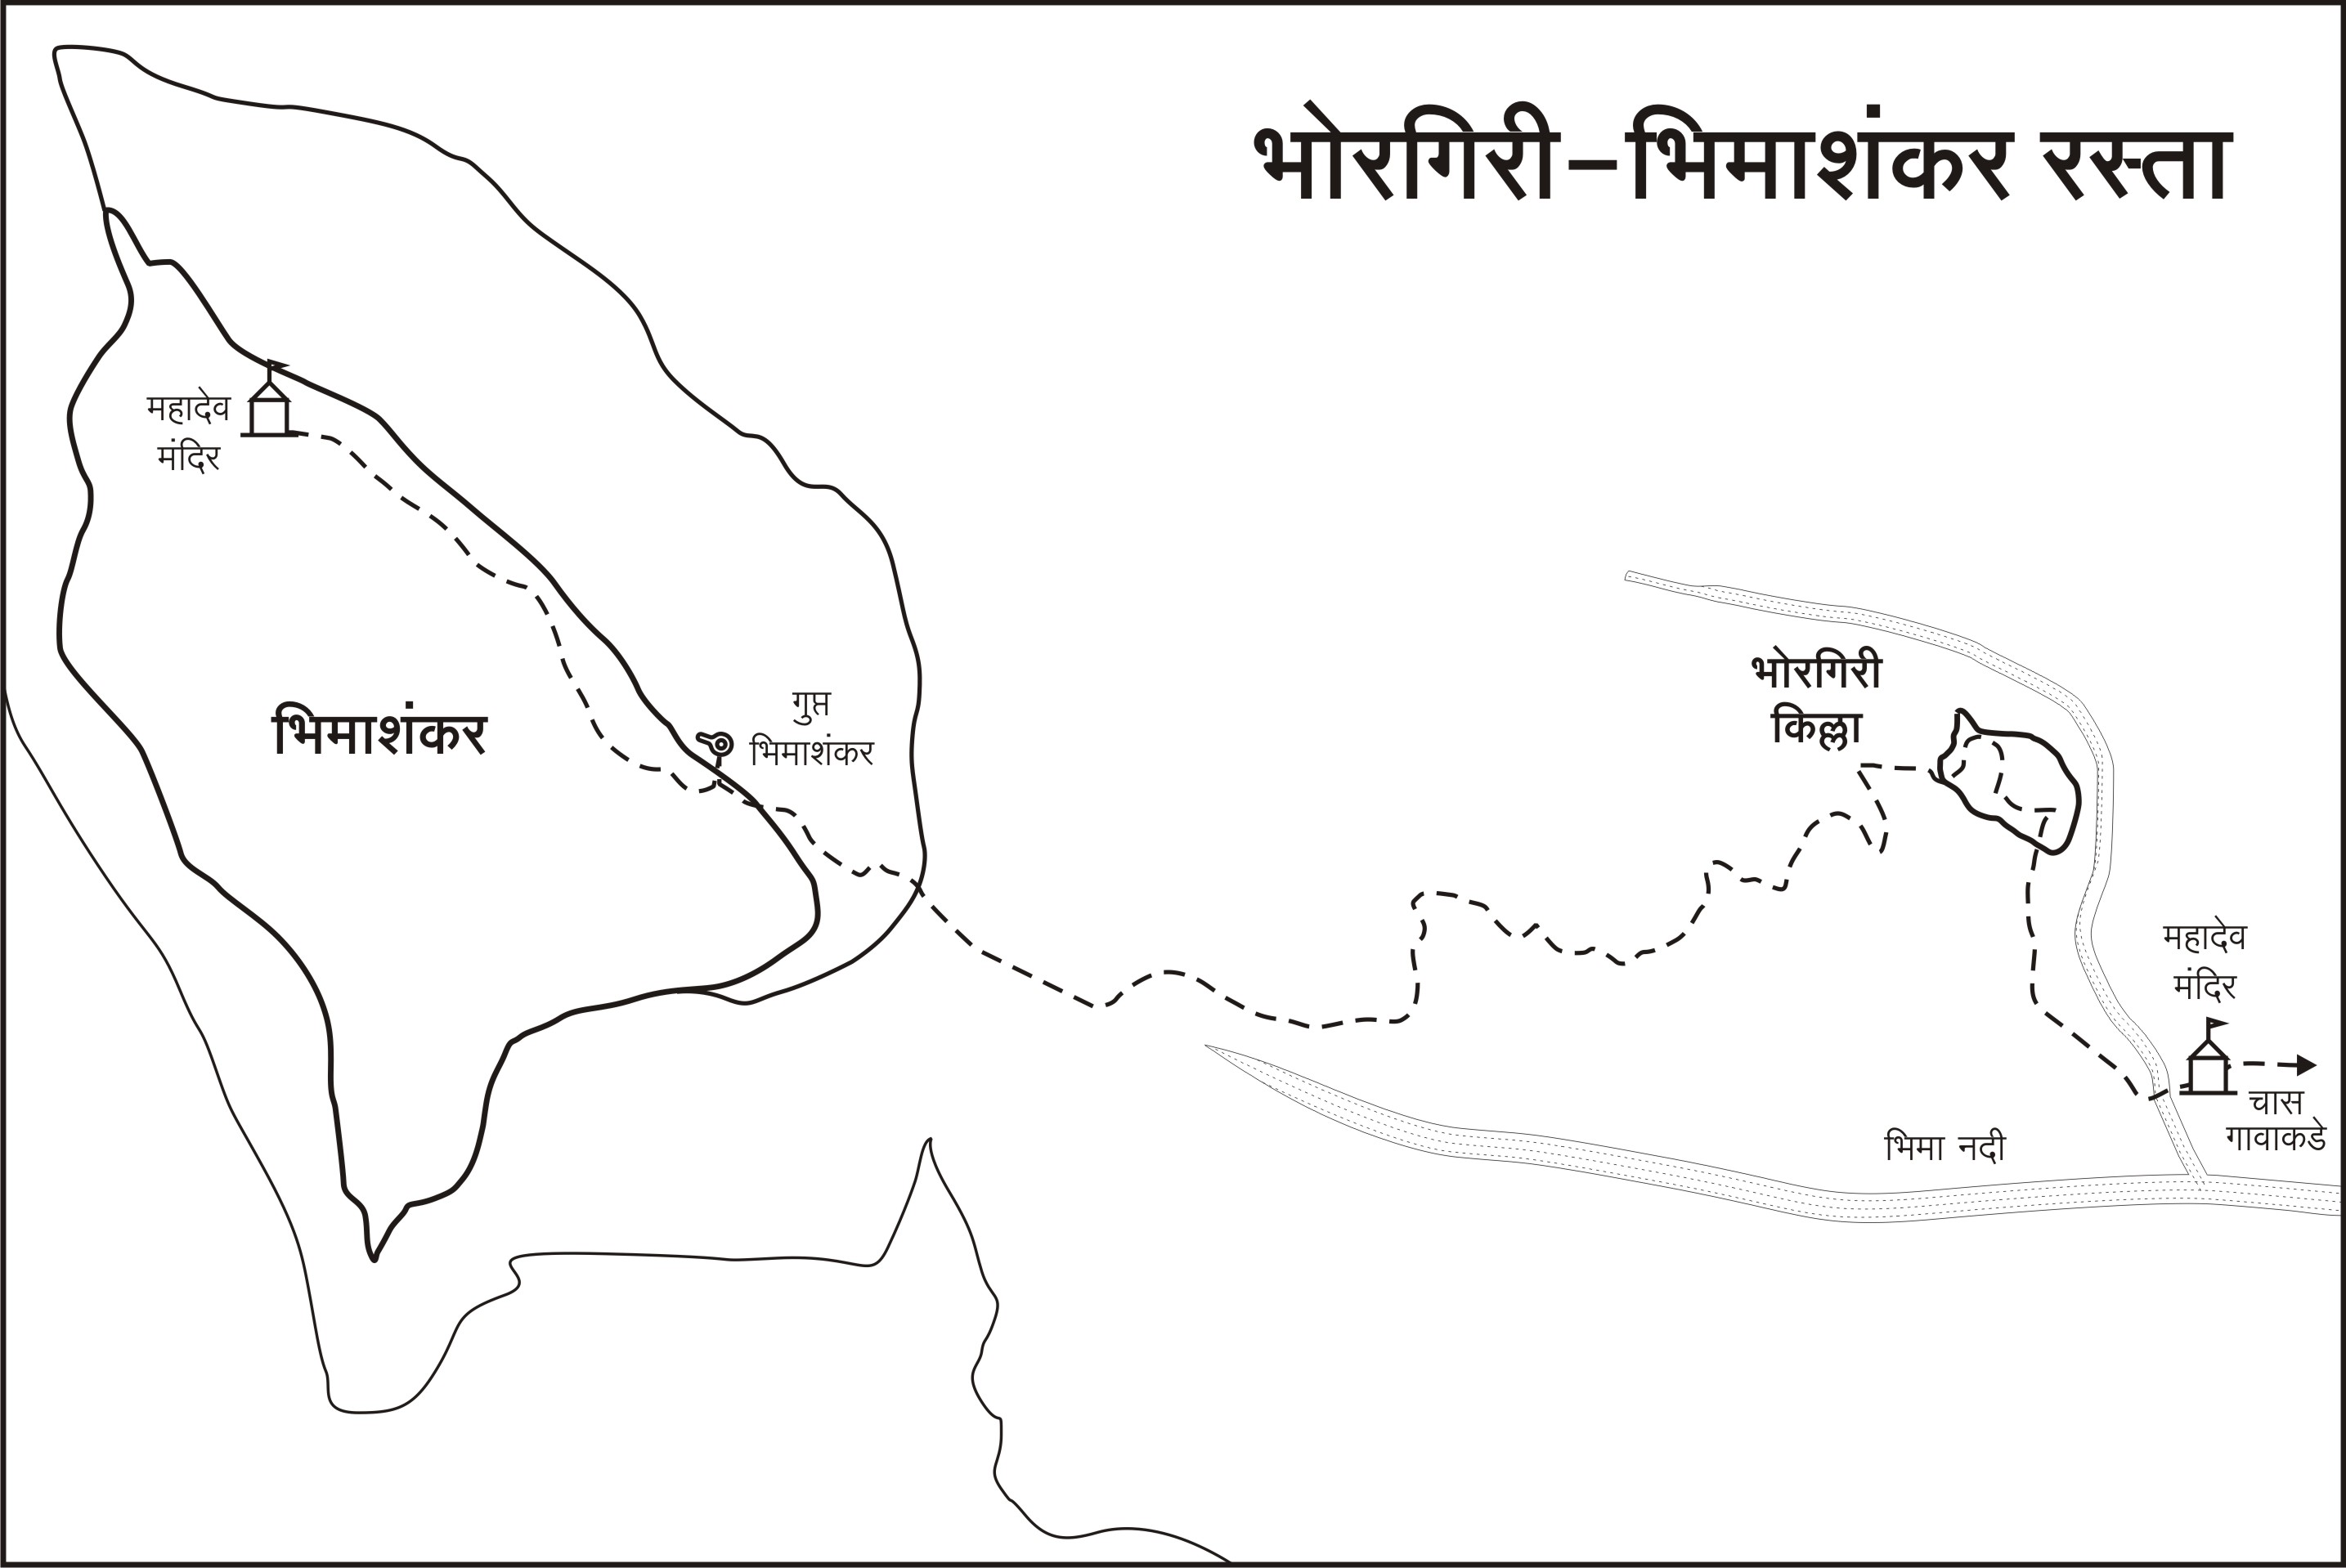 Bhorgiri to Bhimashankar route map traced from GPS